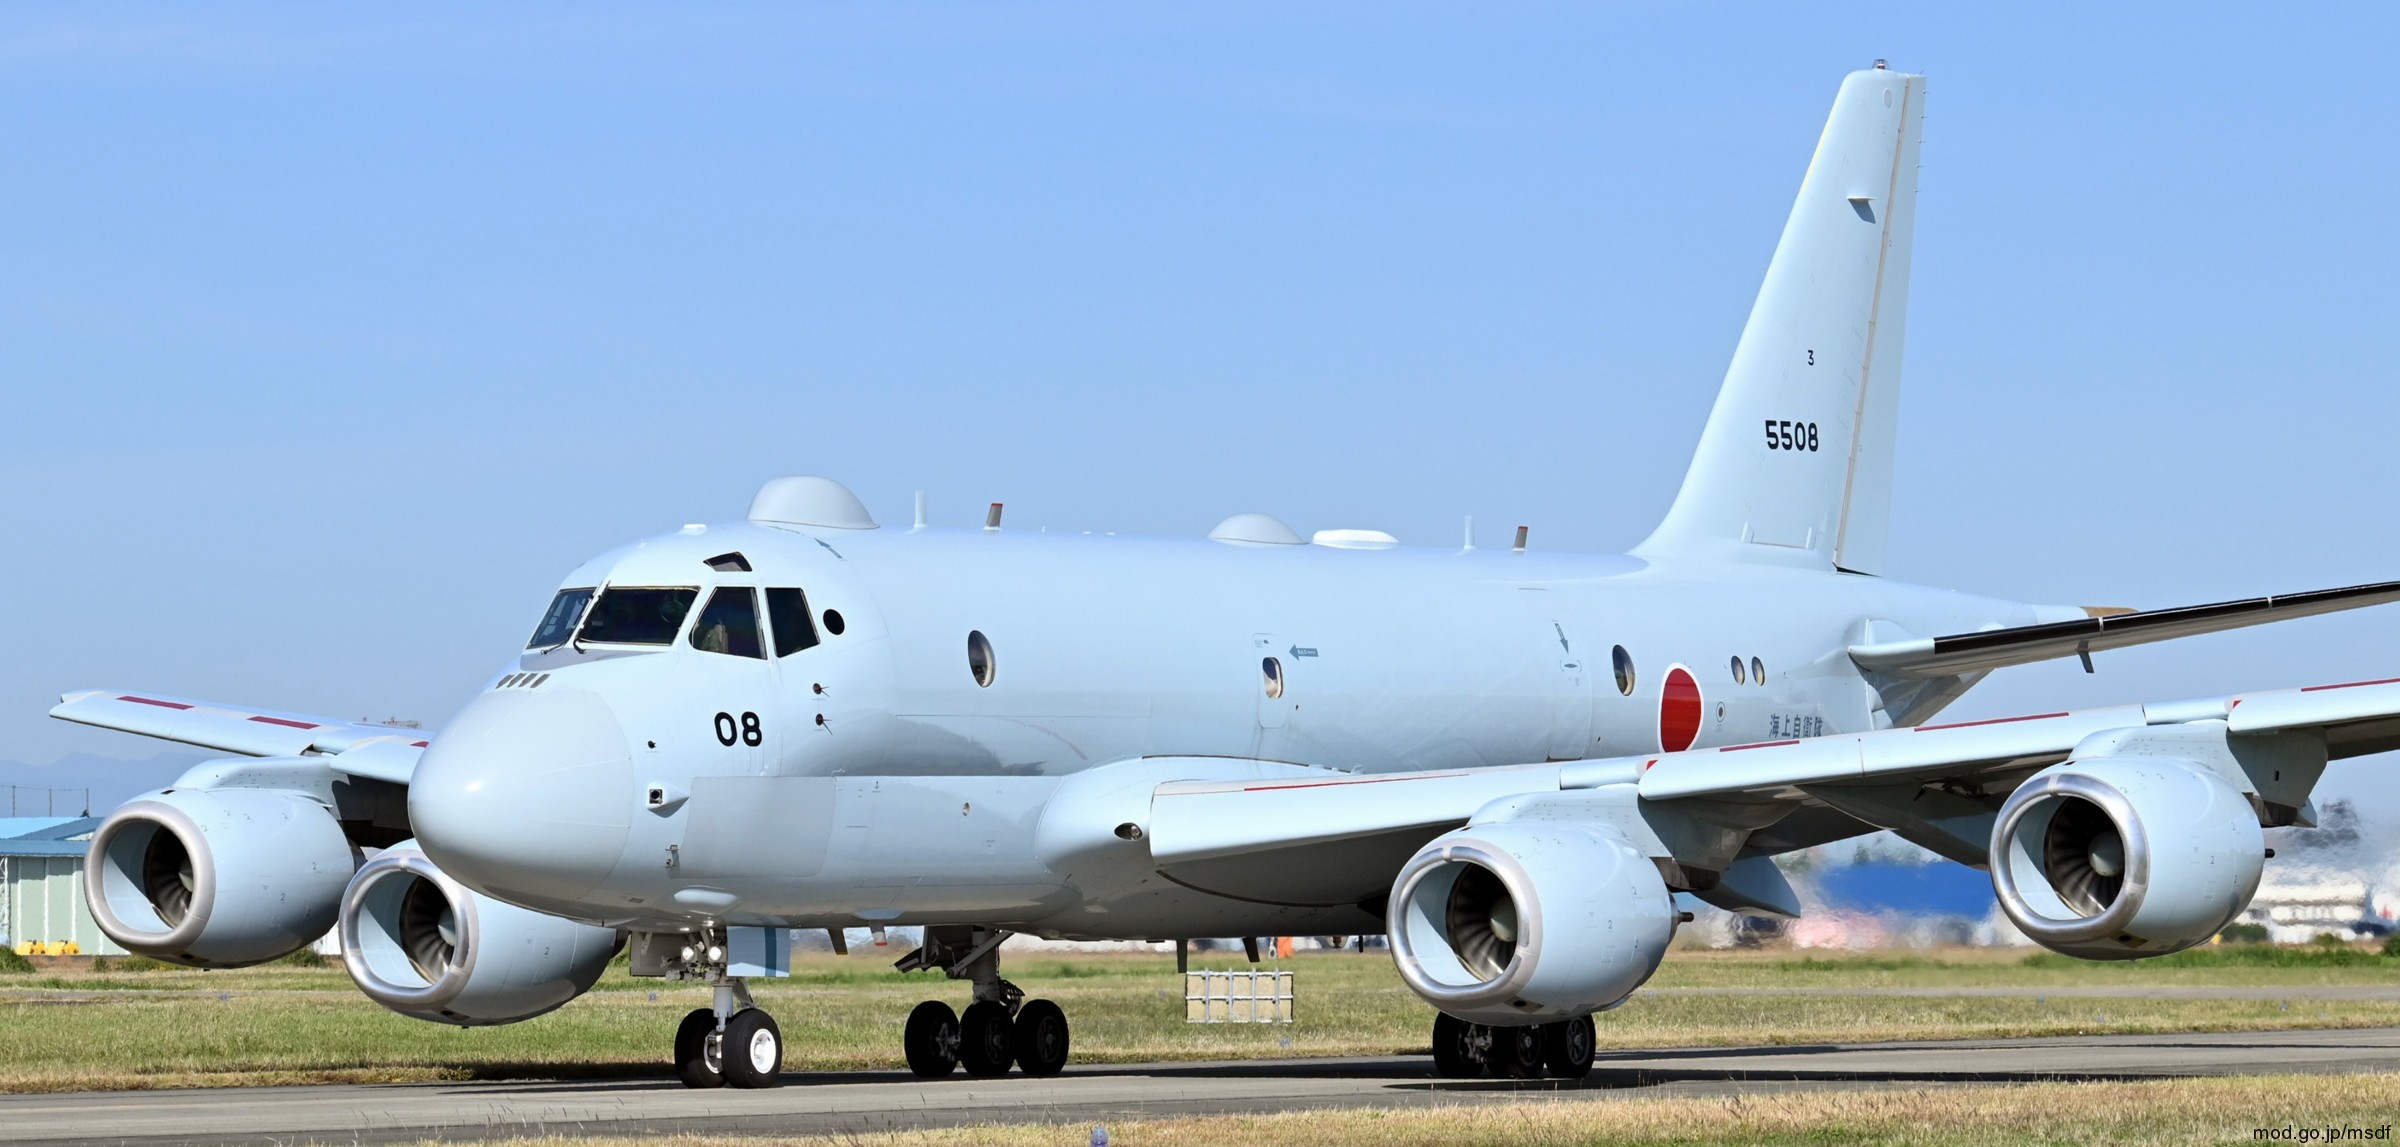 kawasaki p-1 patrol aircraft mpa japan maritime self defense force jmsdf 5508 02